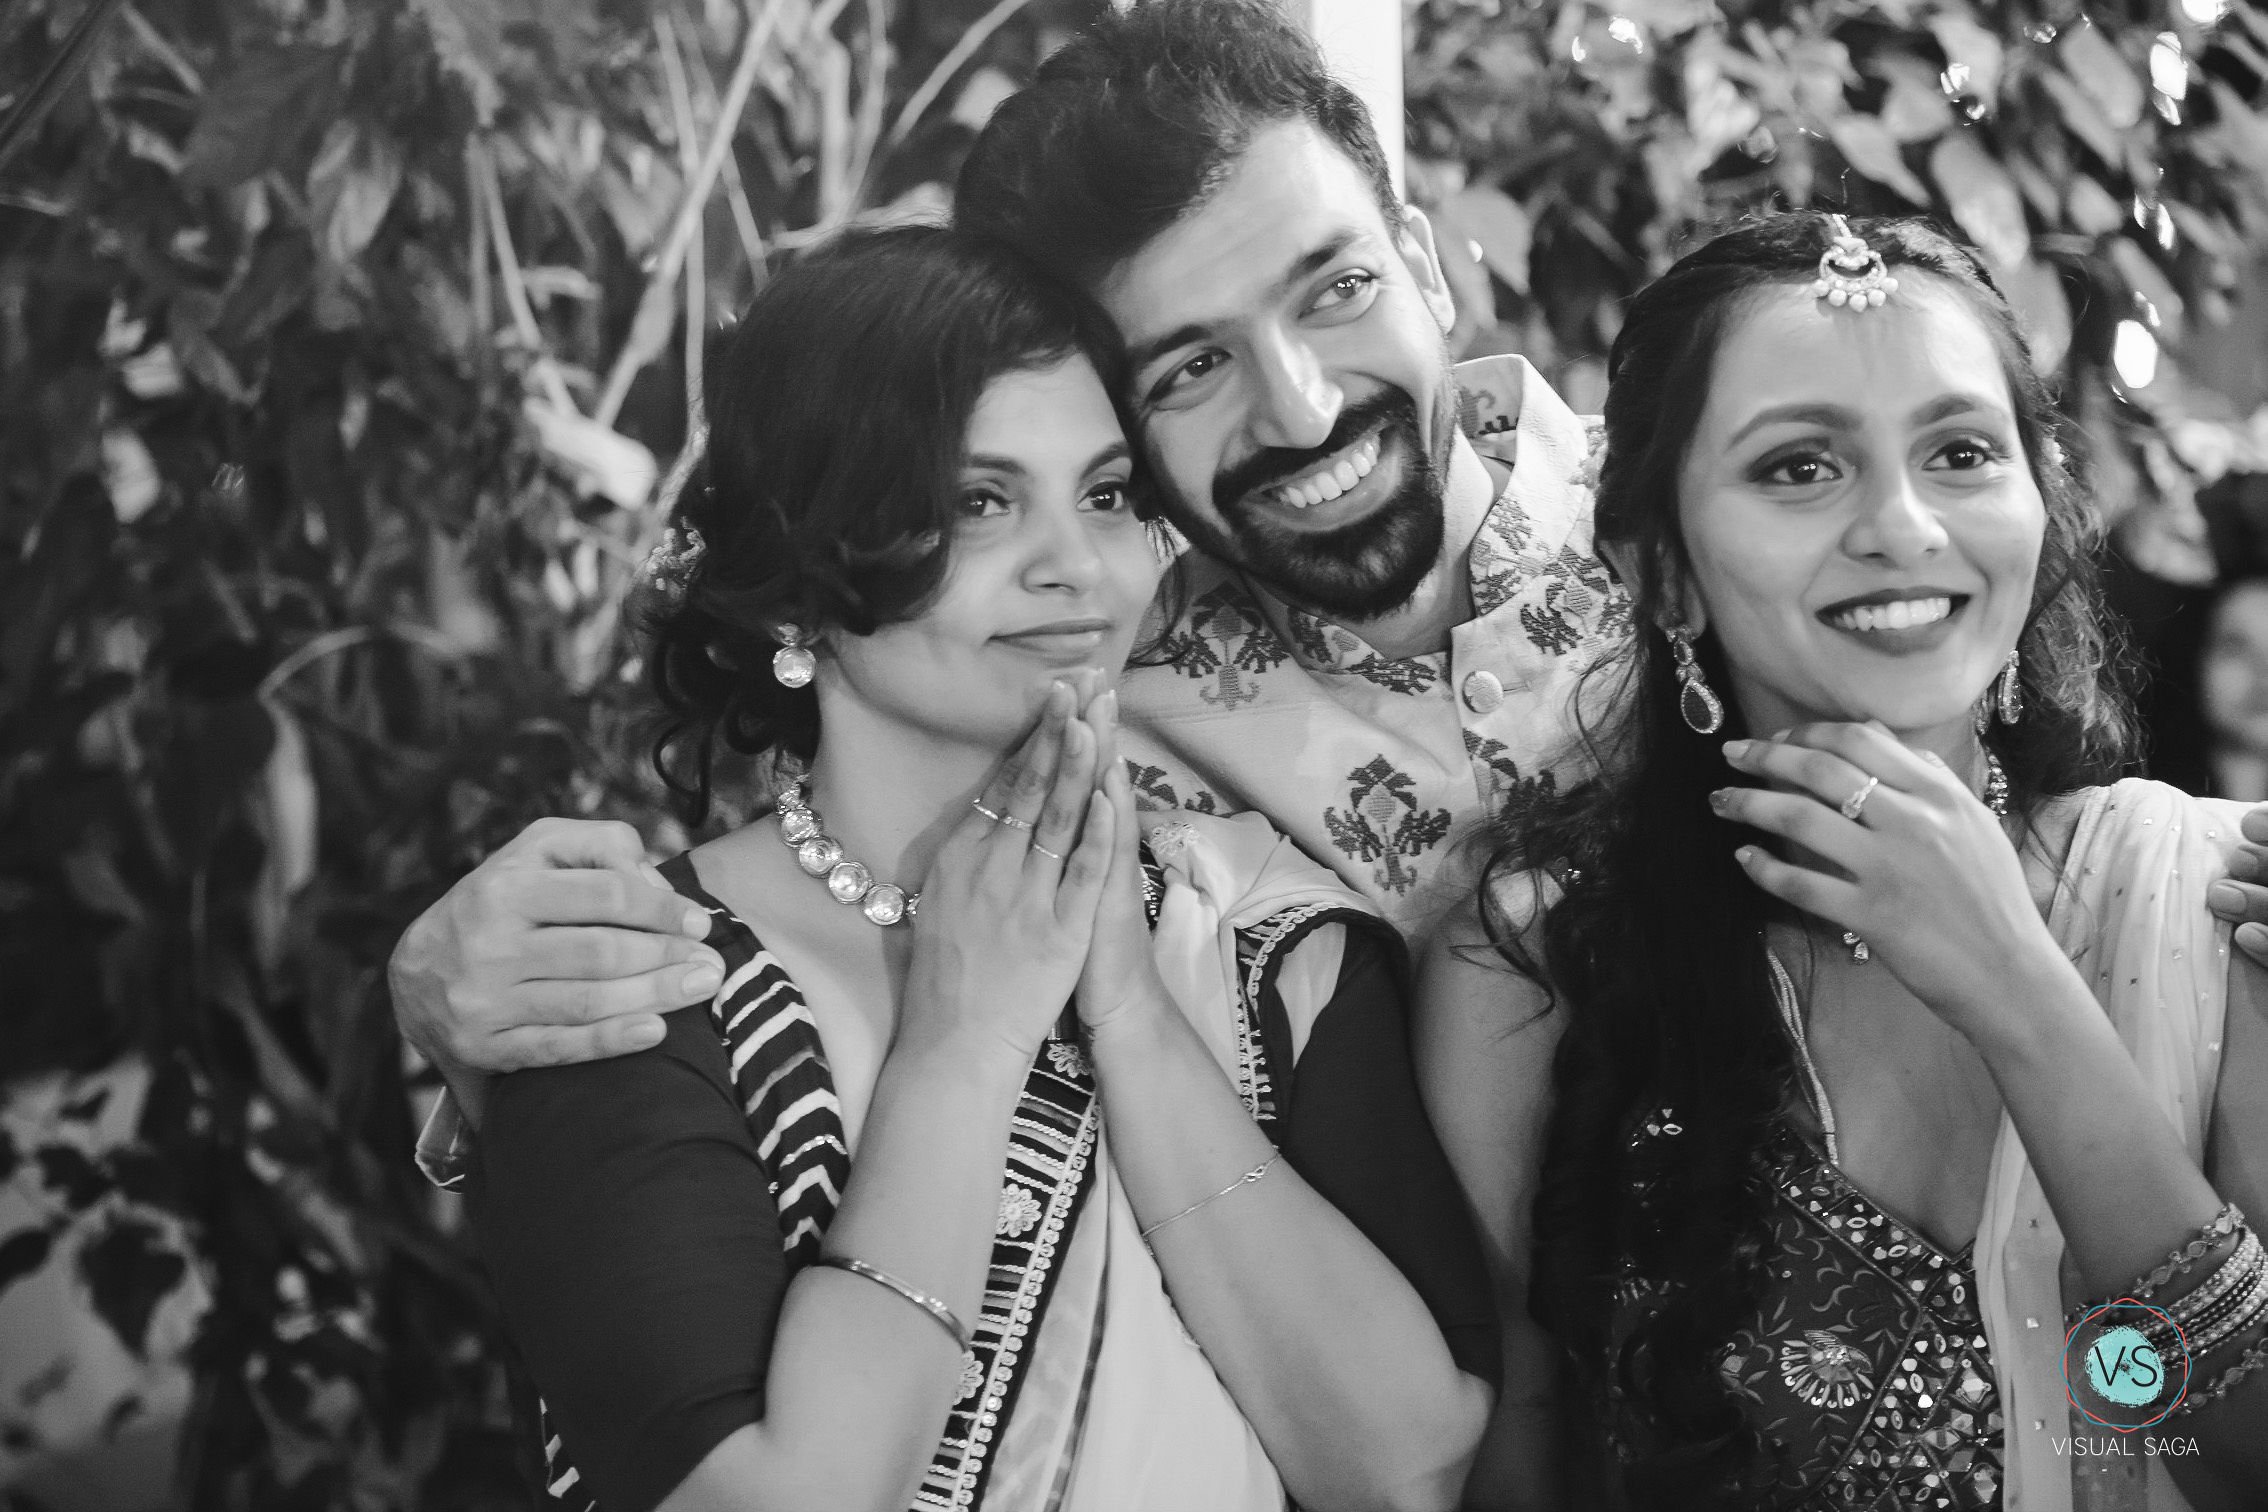 Visual Saga - best wedding photographers in bangalore and pune - emotional bridemaids on wedding day.jpg